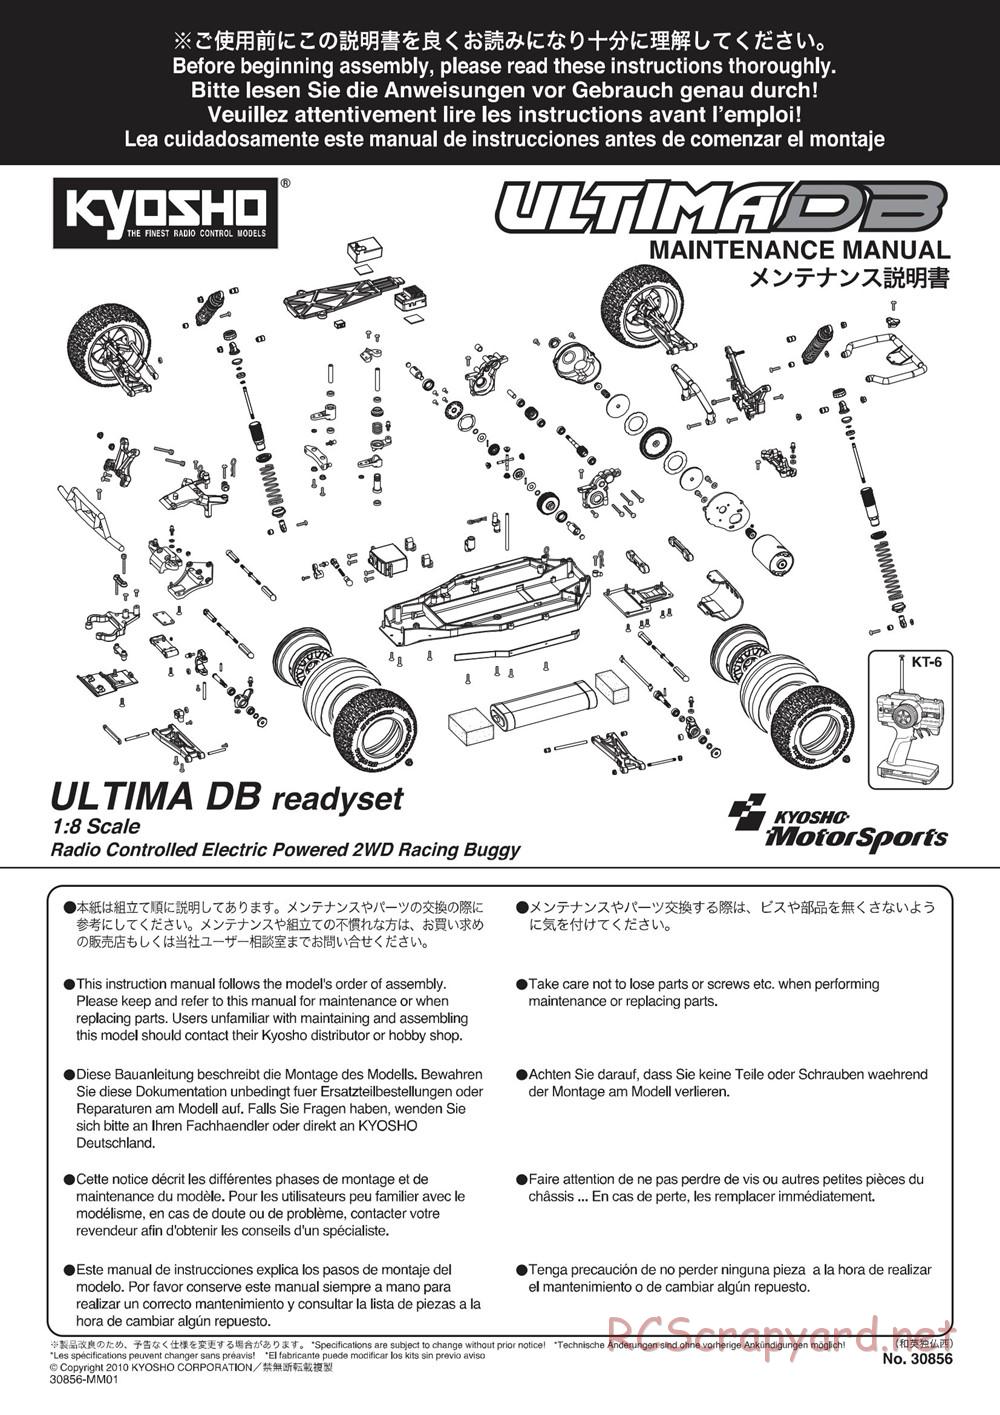 Kyosho - Ultima-DB - Manual - Page 1